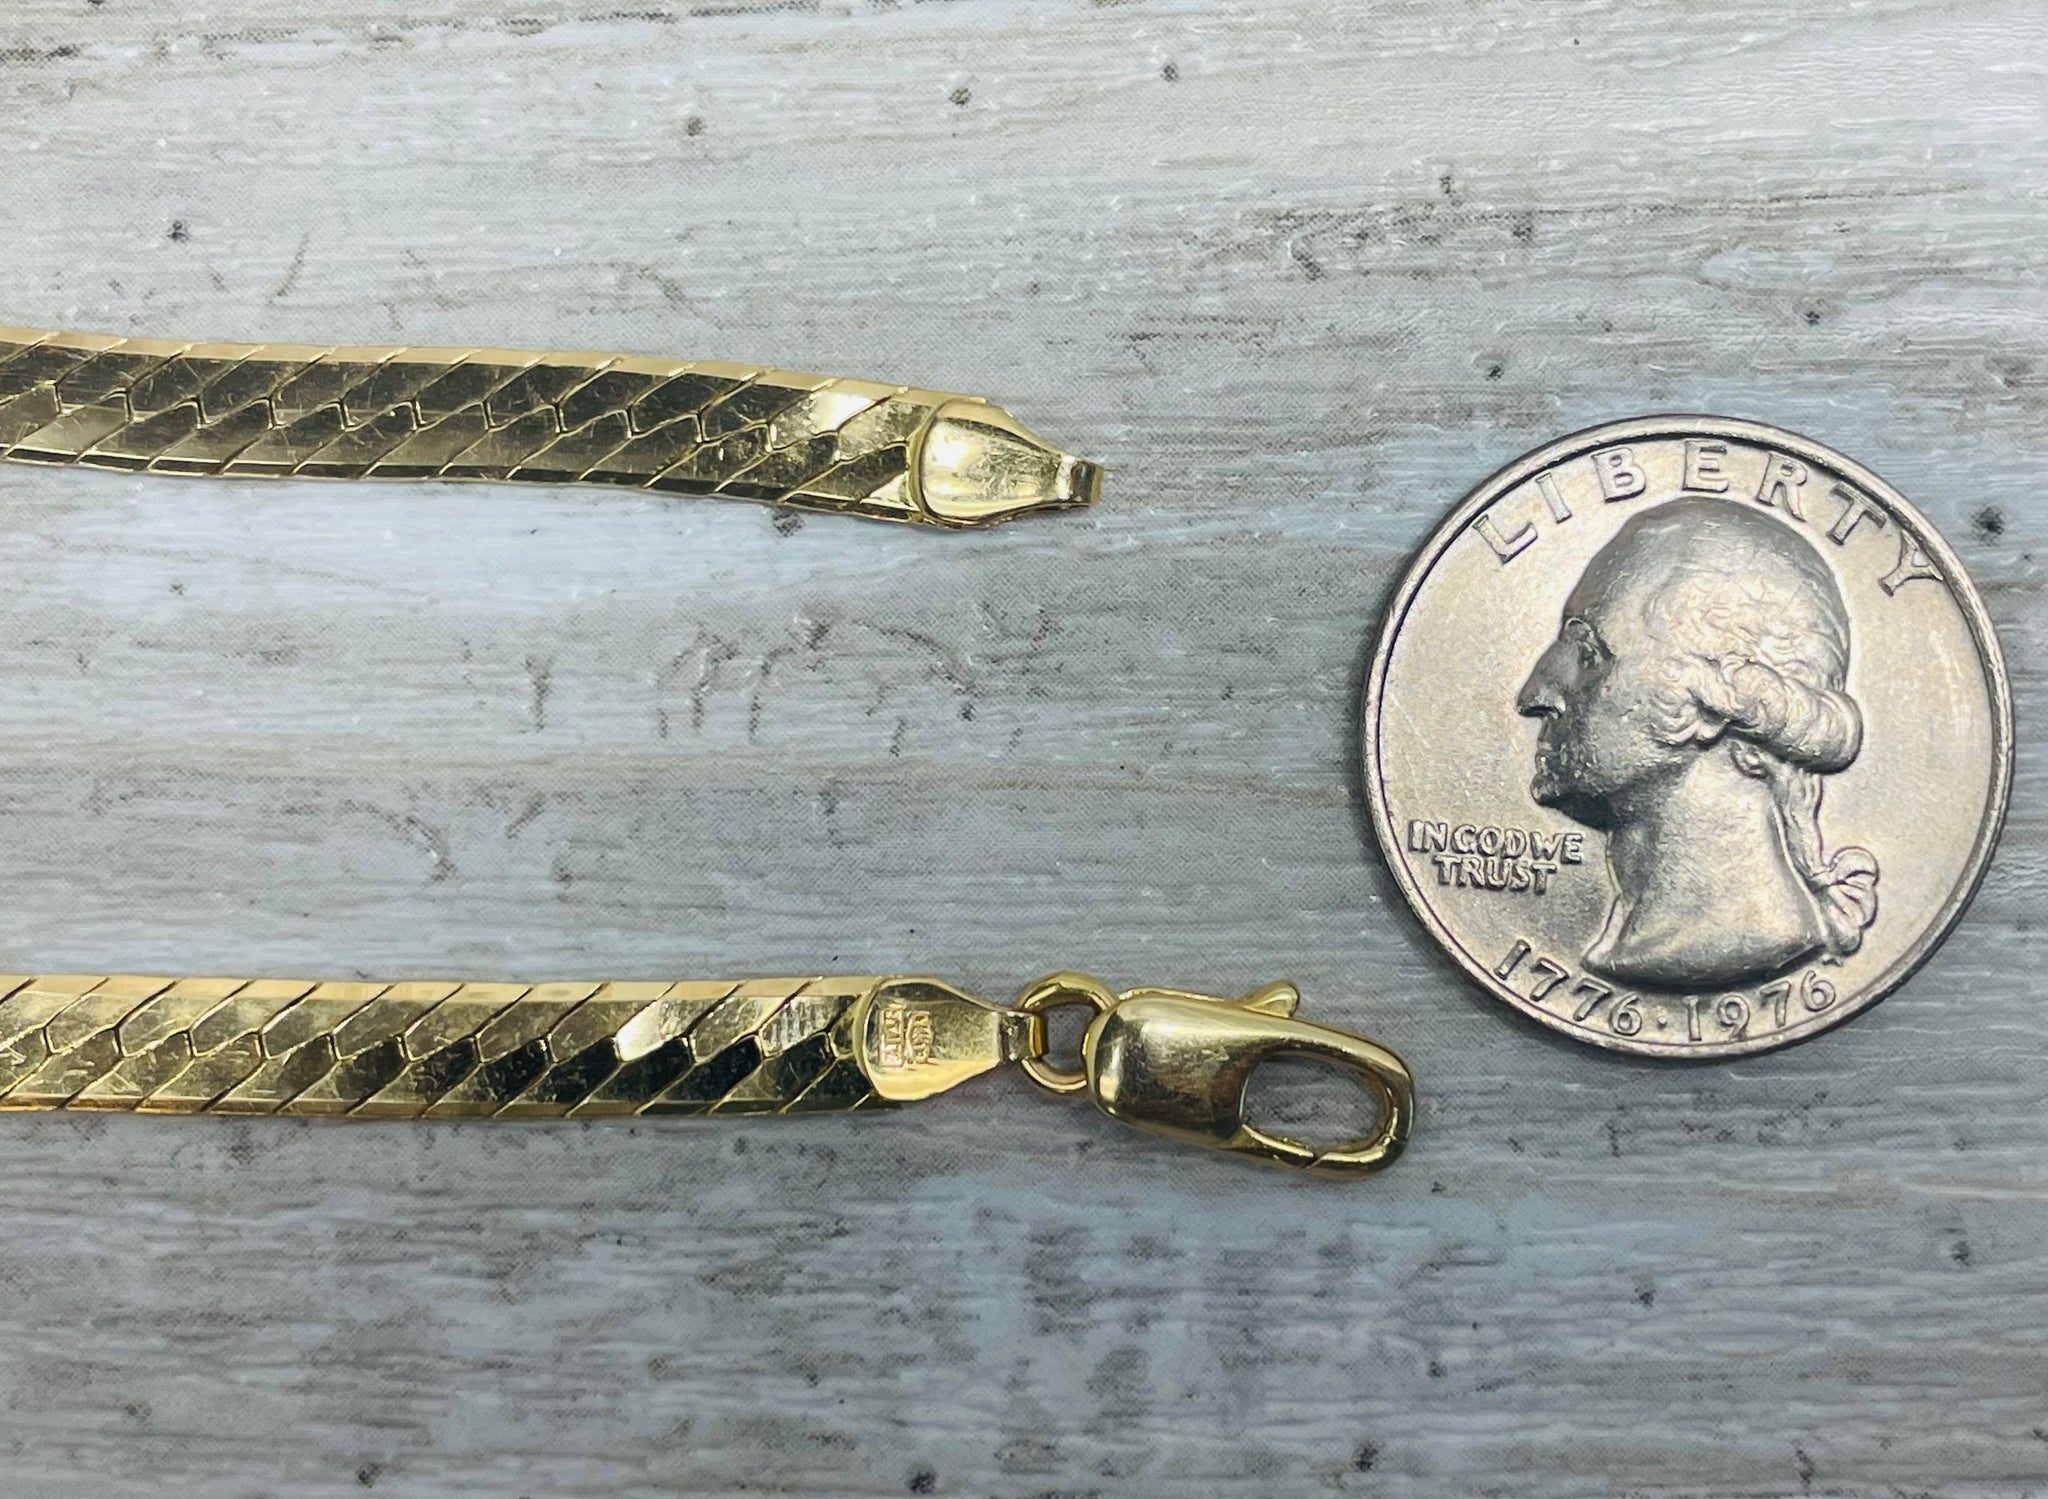 24" 14k Solid Yellow Gold Double Herringbone Chain Italy